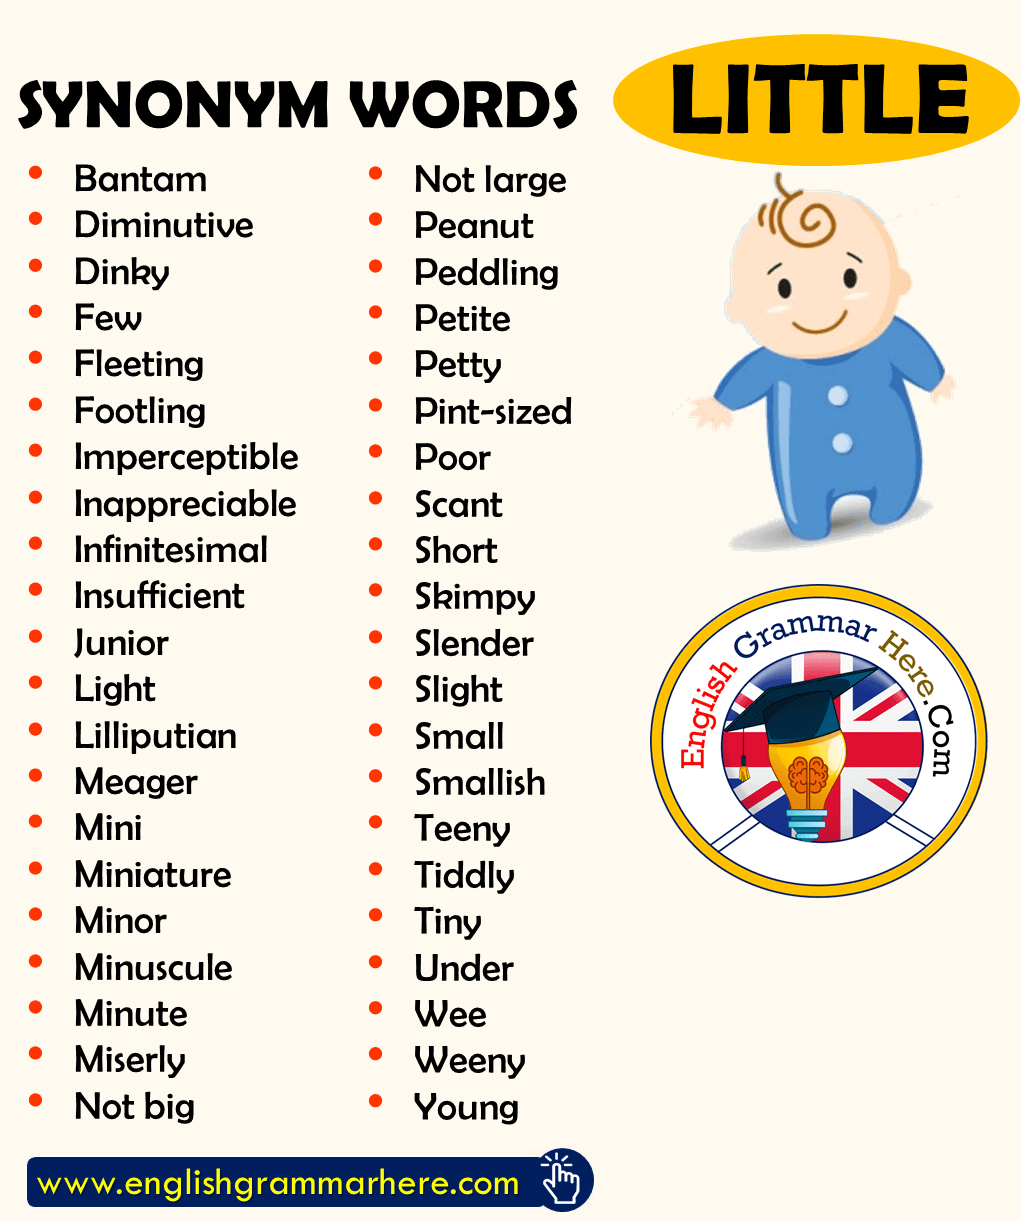 Synonym Words – LITTLE, English Vocabulary